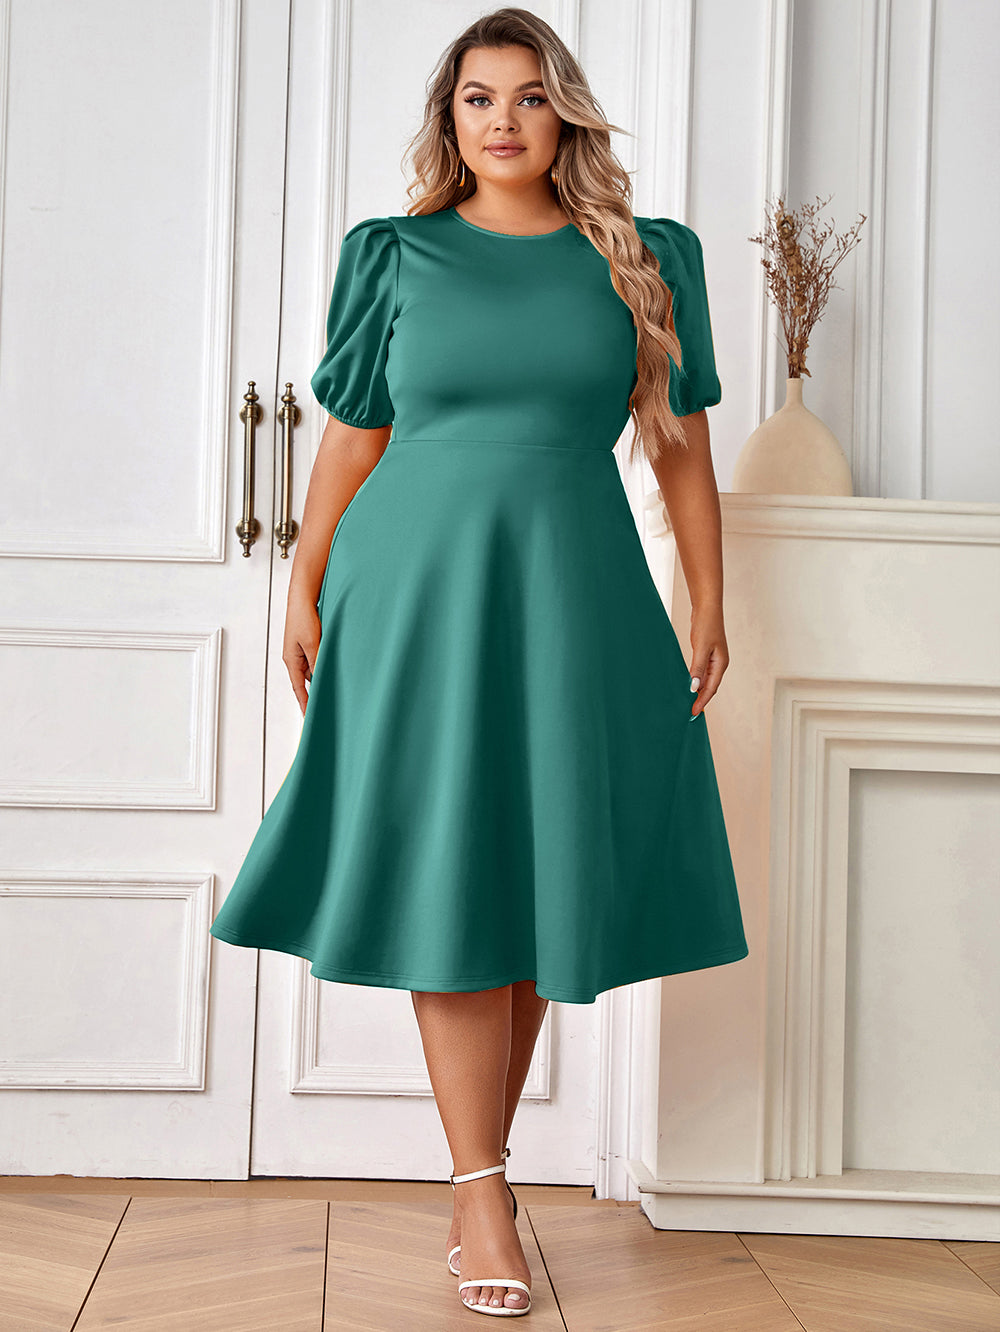 Green Bodycon Dress HB78260